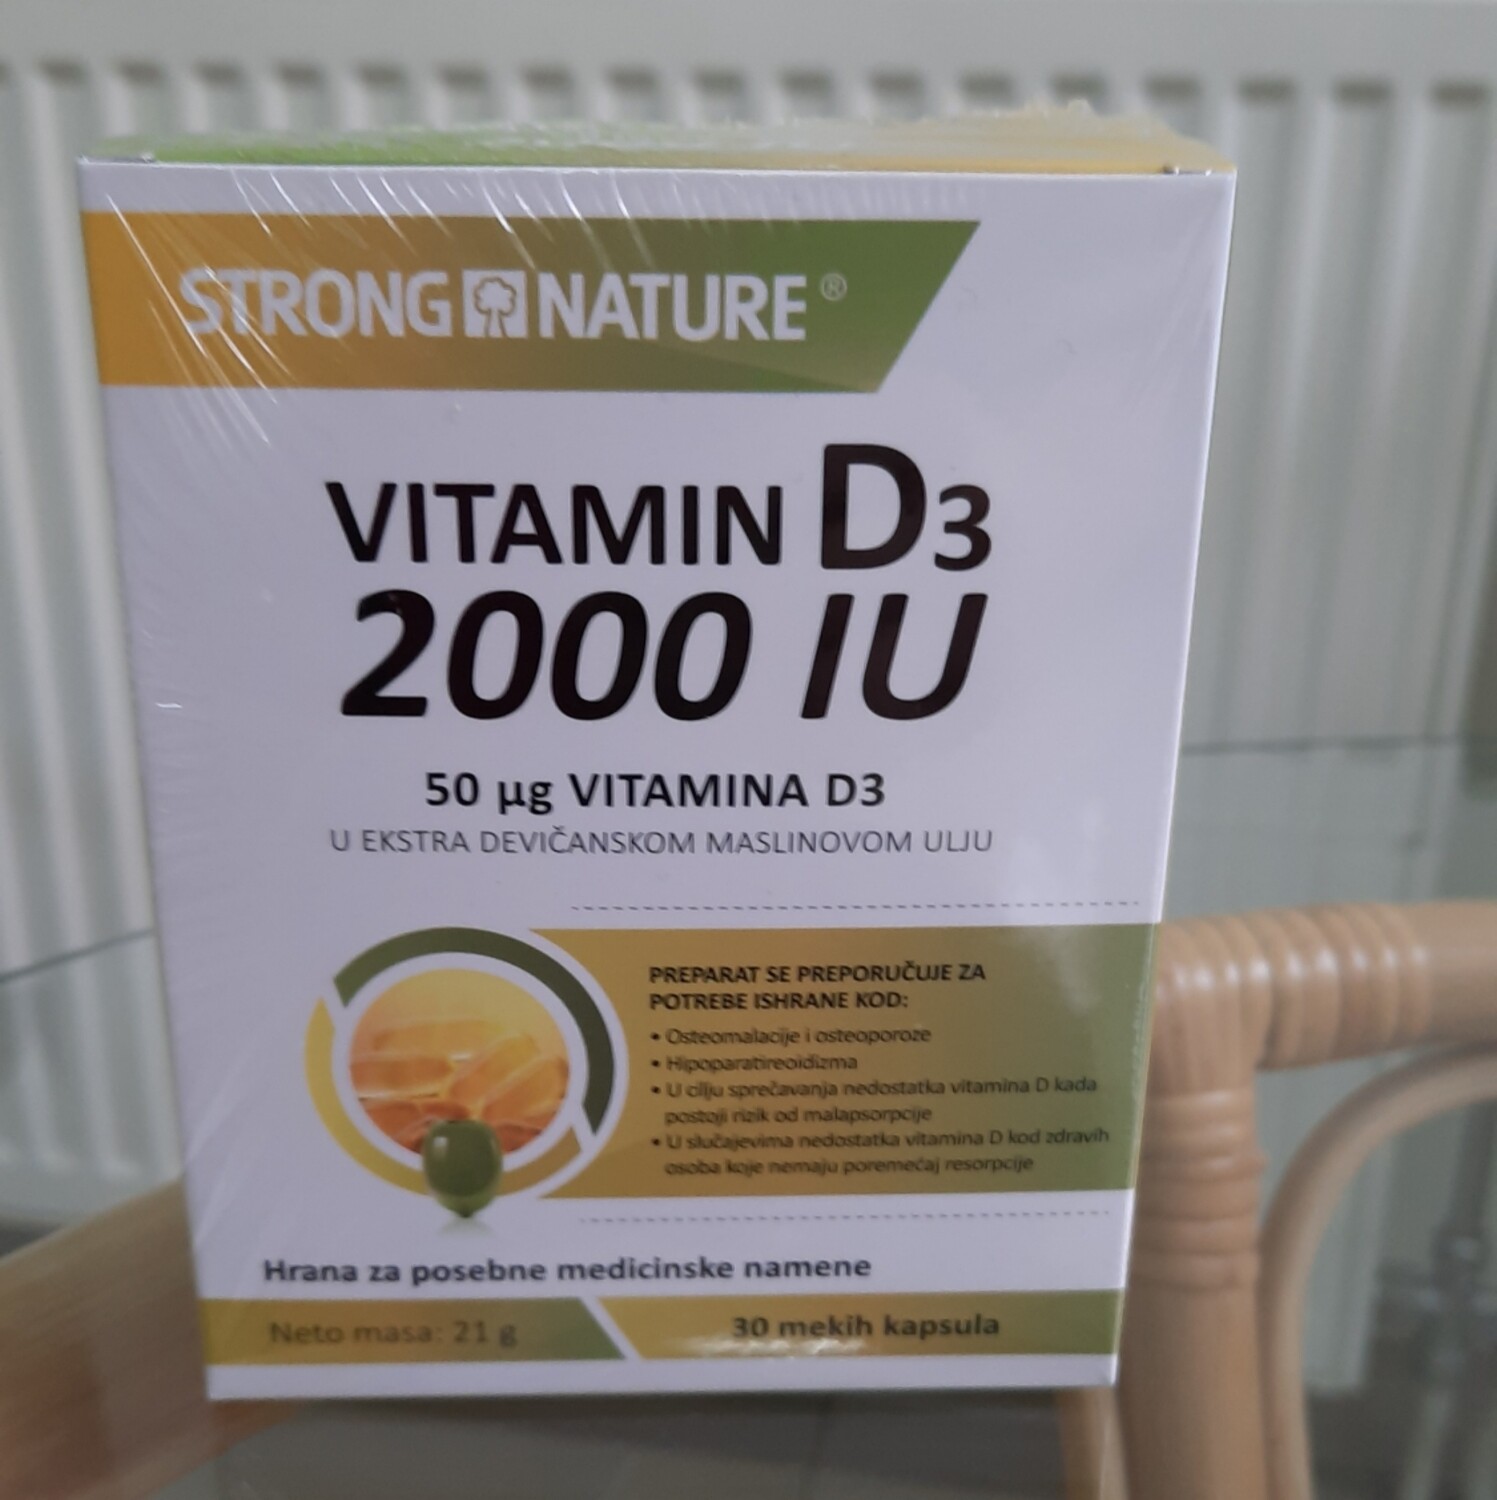 Strong Nature - Vitamin D3 2000 IU  30 mekih kapsula